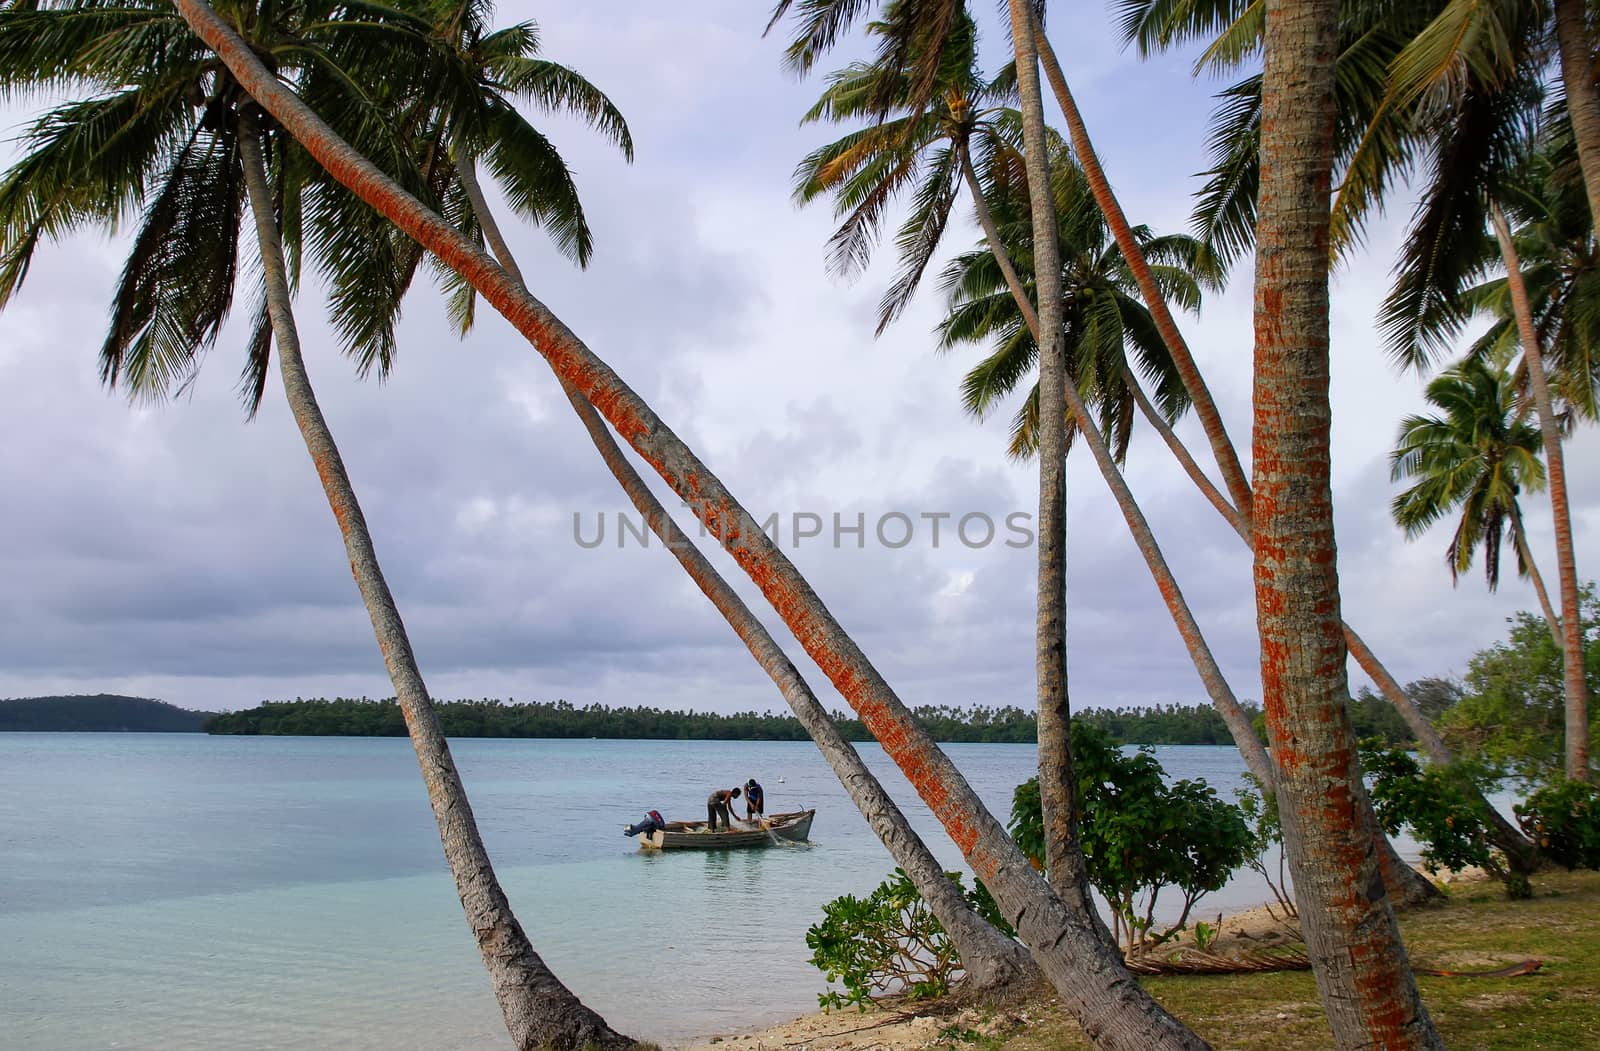 Local fishermen in a boat, Ofu island, Vavau group, Tonga